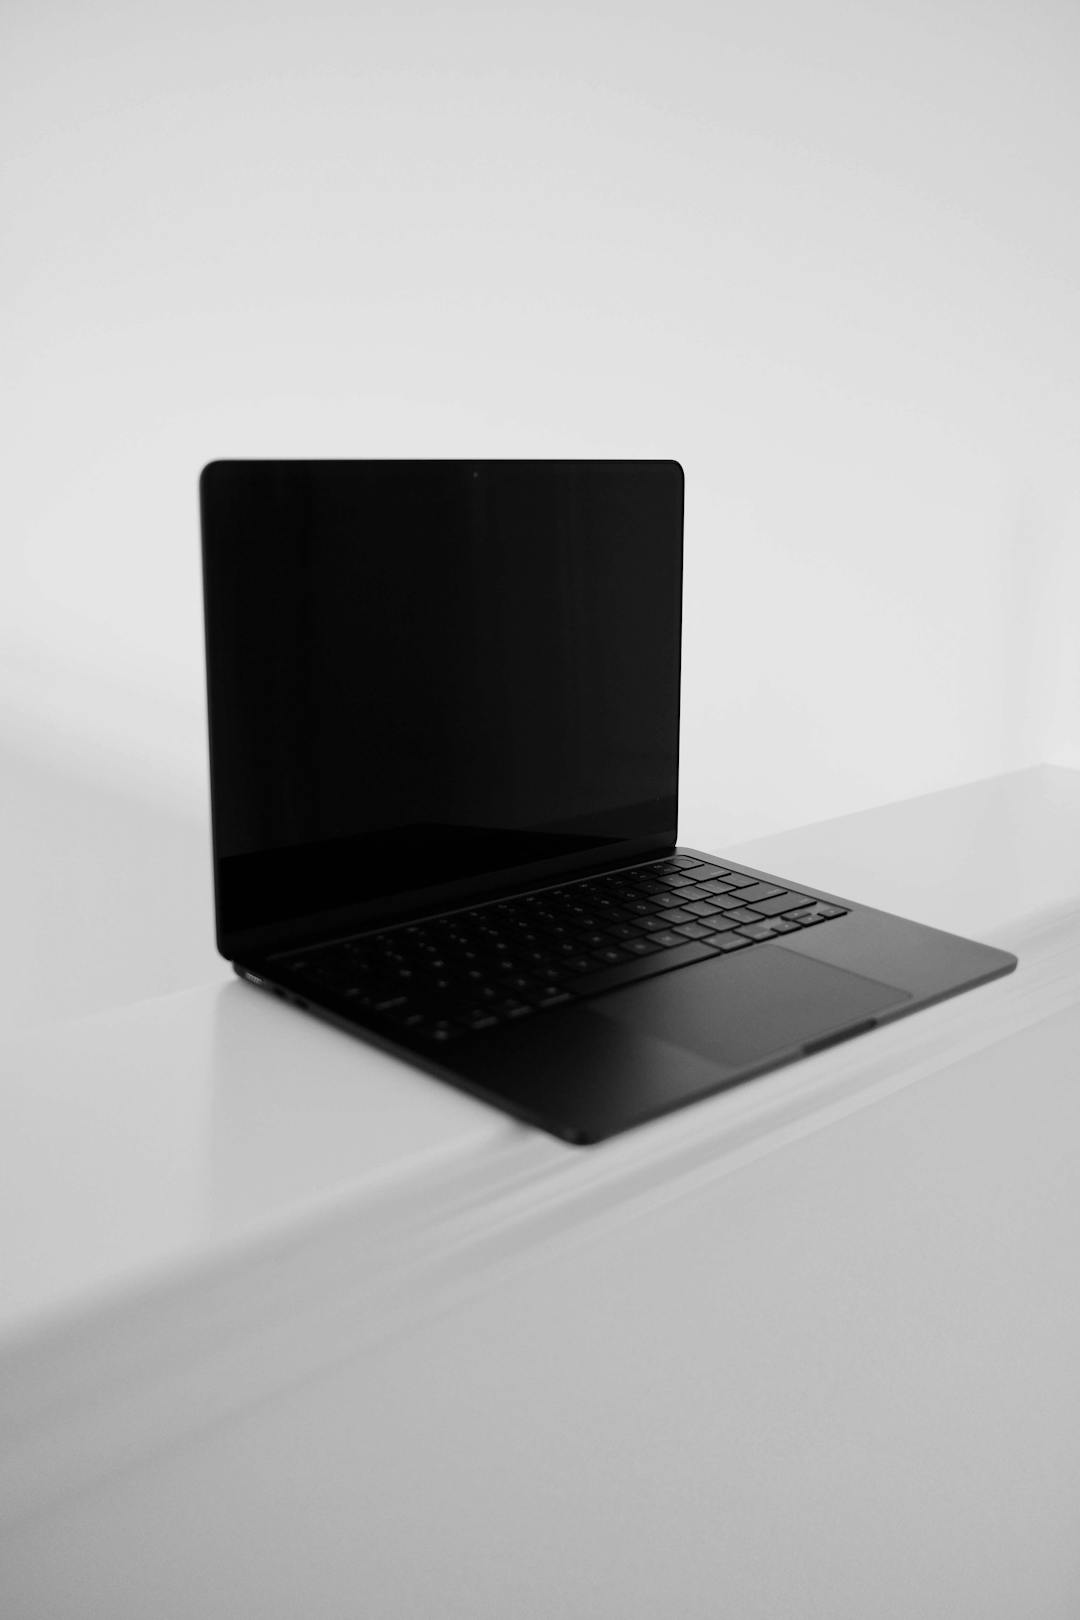 A black Macbook against a white backdrop